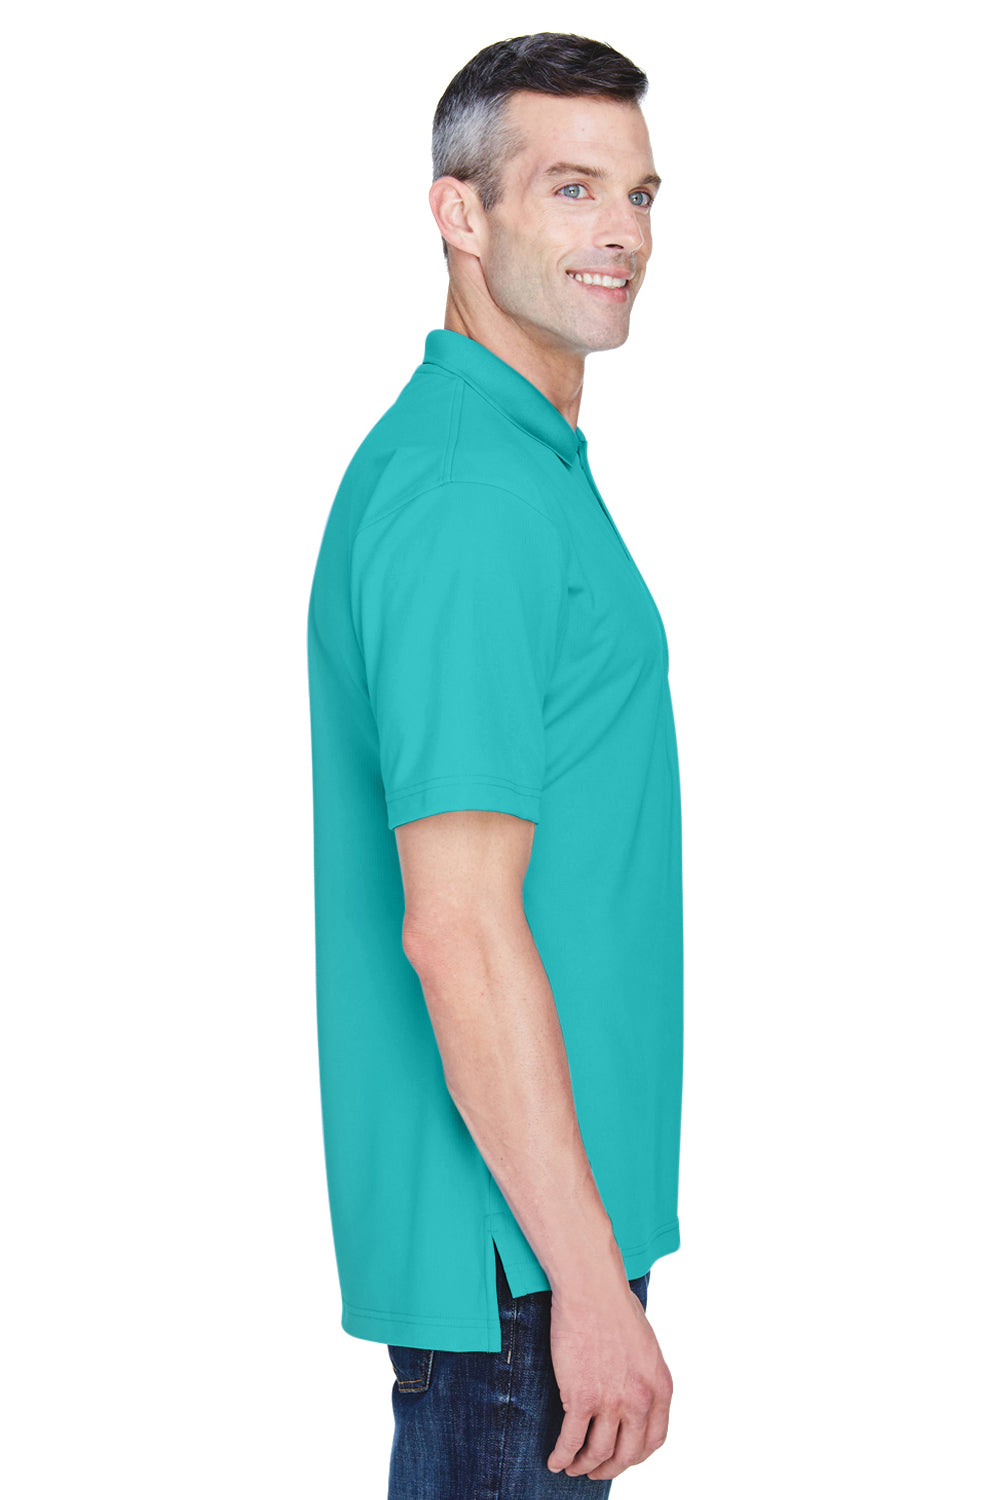 UltraClub 8445 Mens Cool & Dry Performance Moisture Wicking Short Sleeve Polo Shirt Jade Green Side